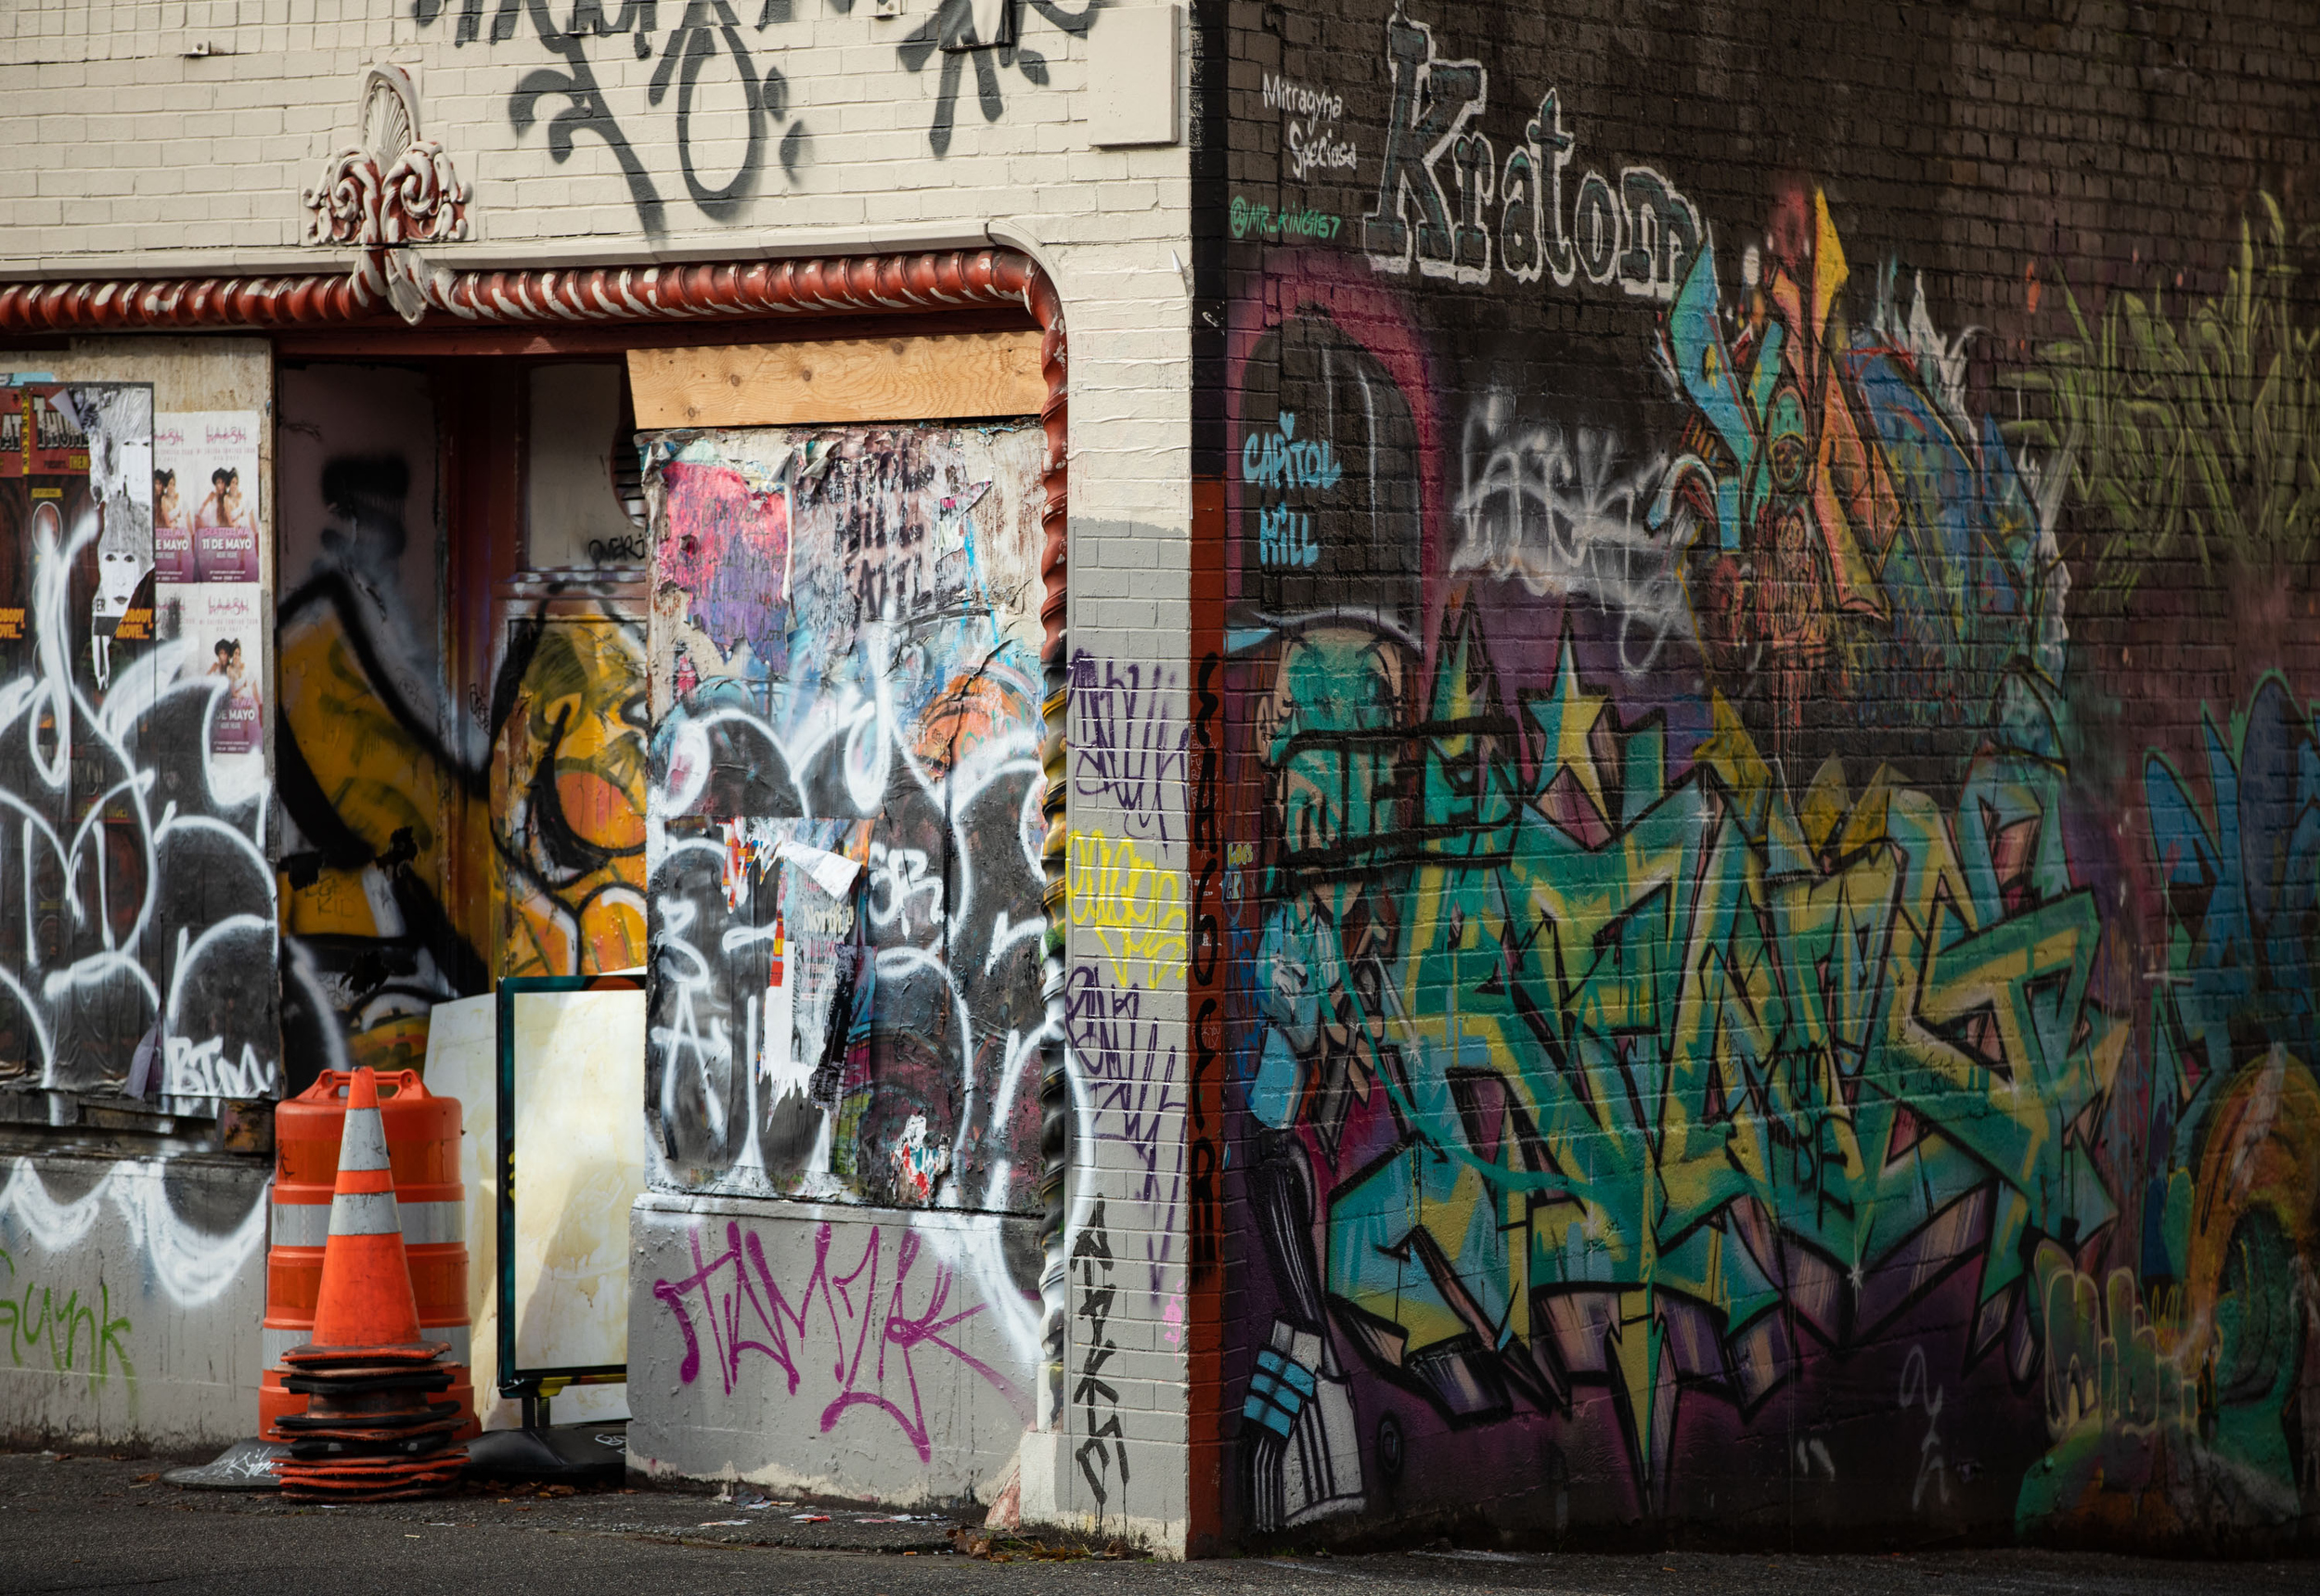 graffiti covered walls on a street corner